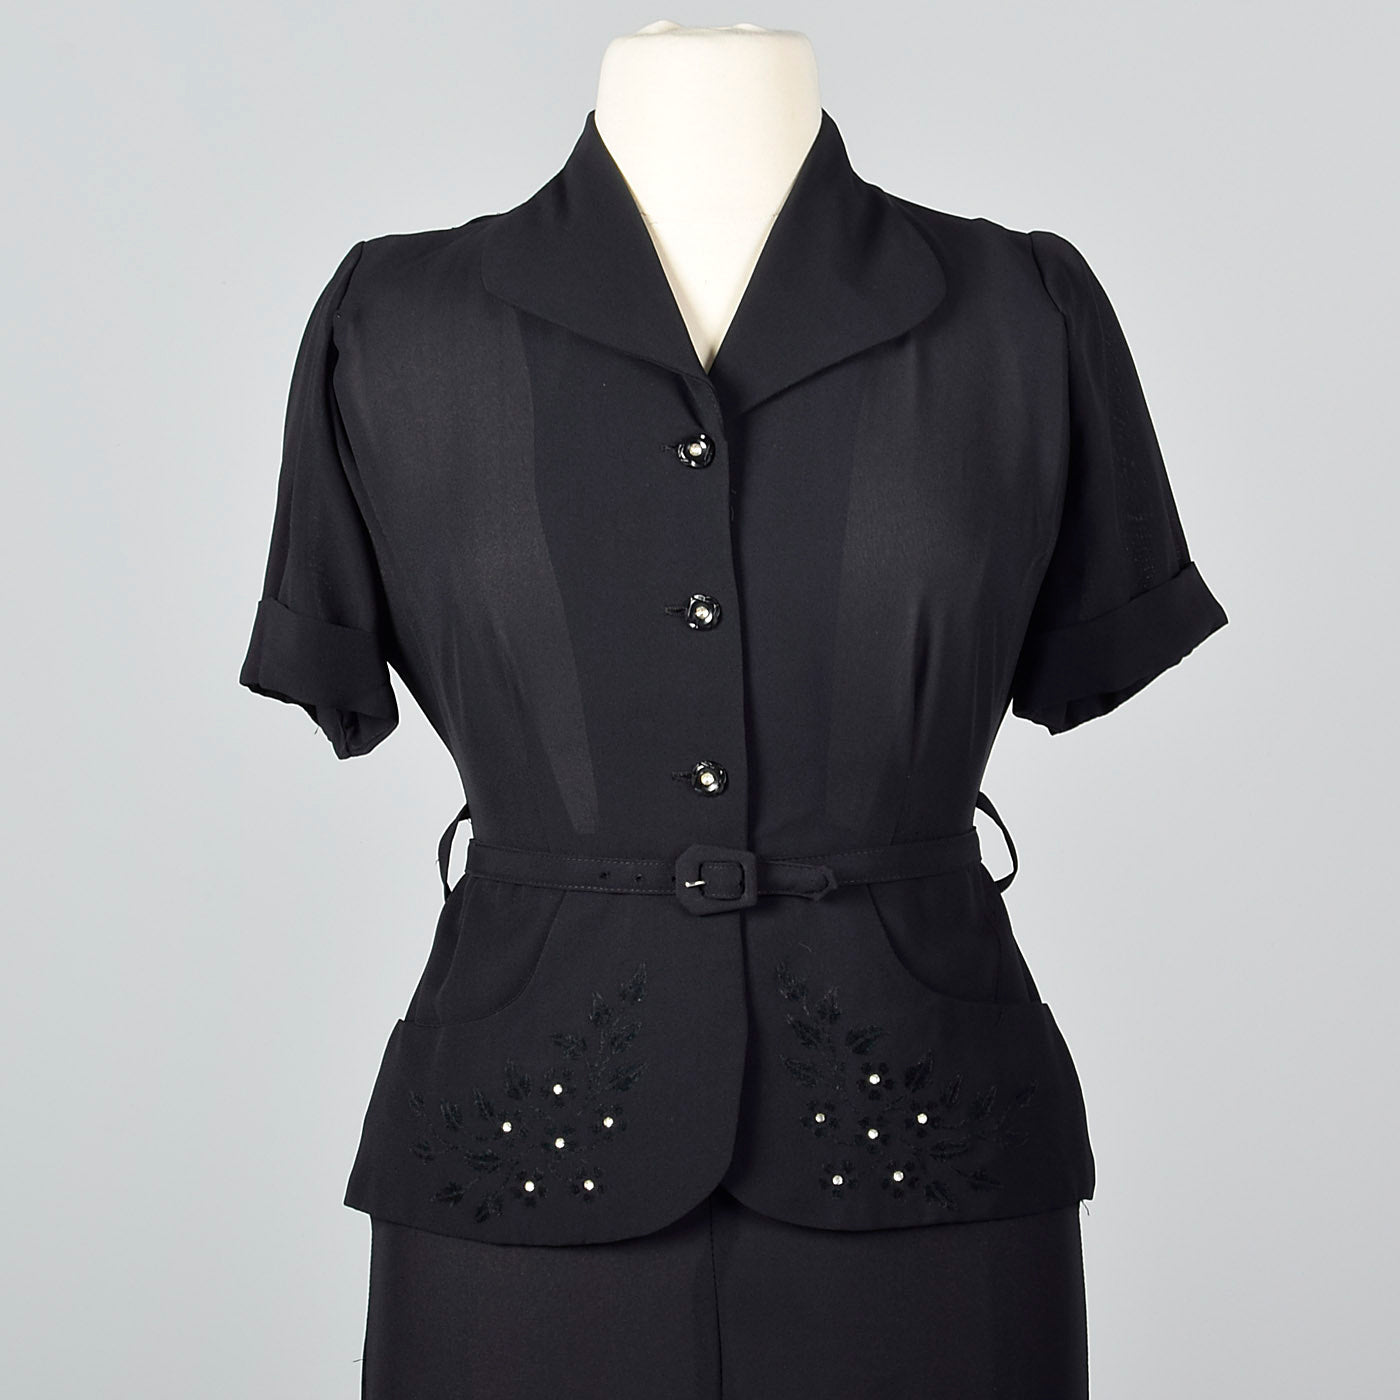 1950s Black Rayon Day Dress with Peplum Waist